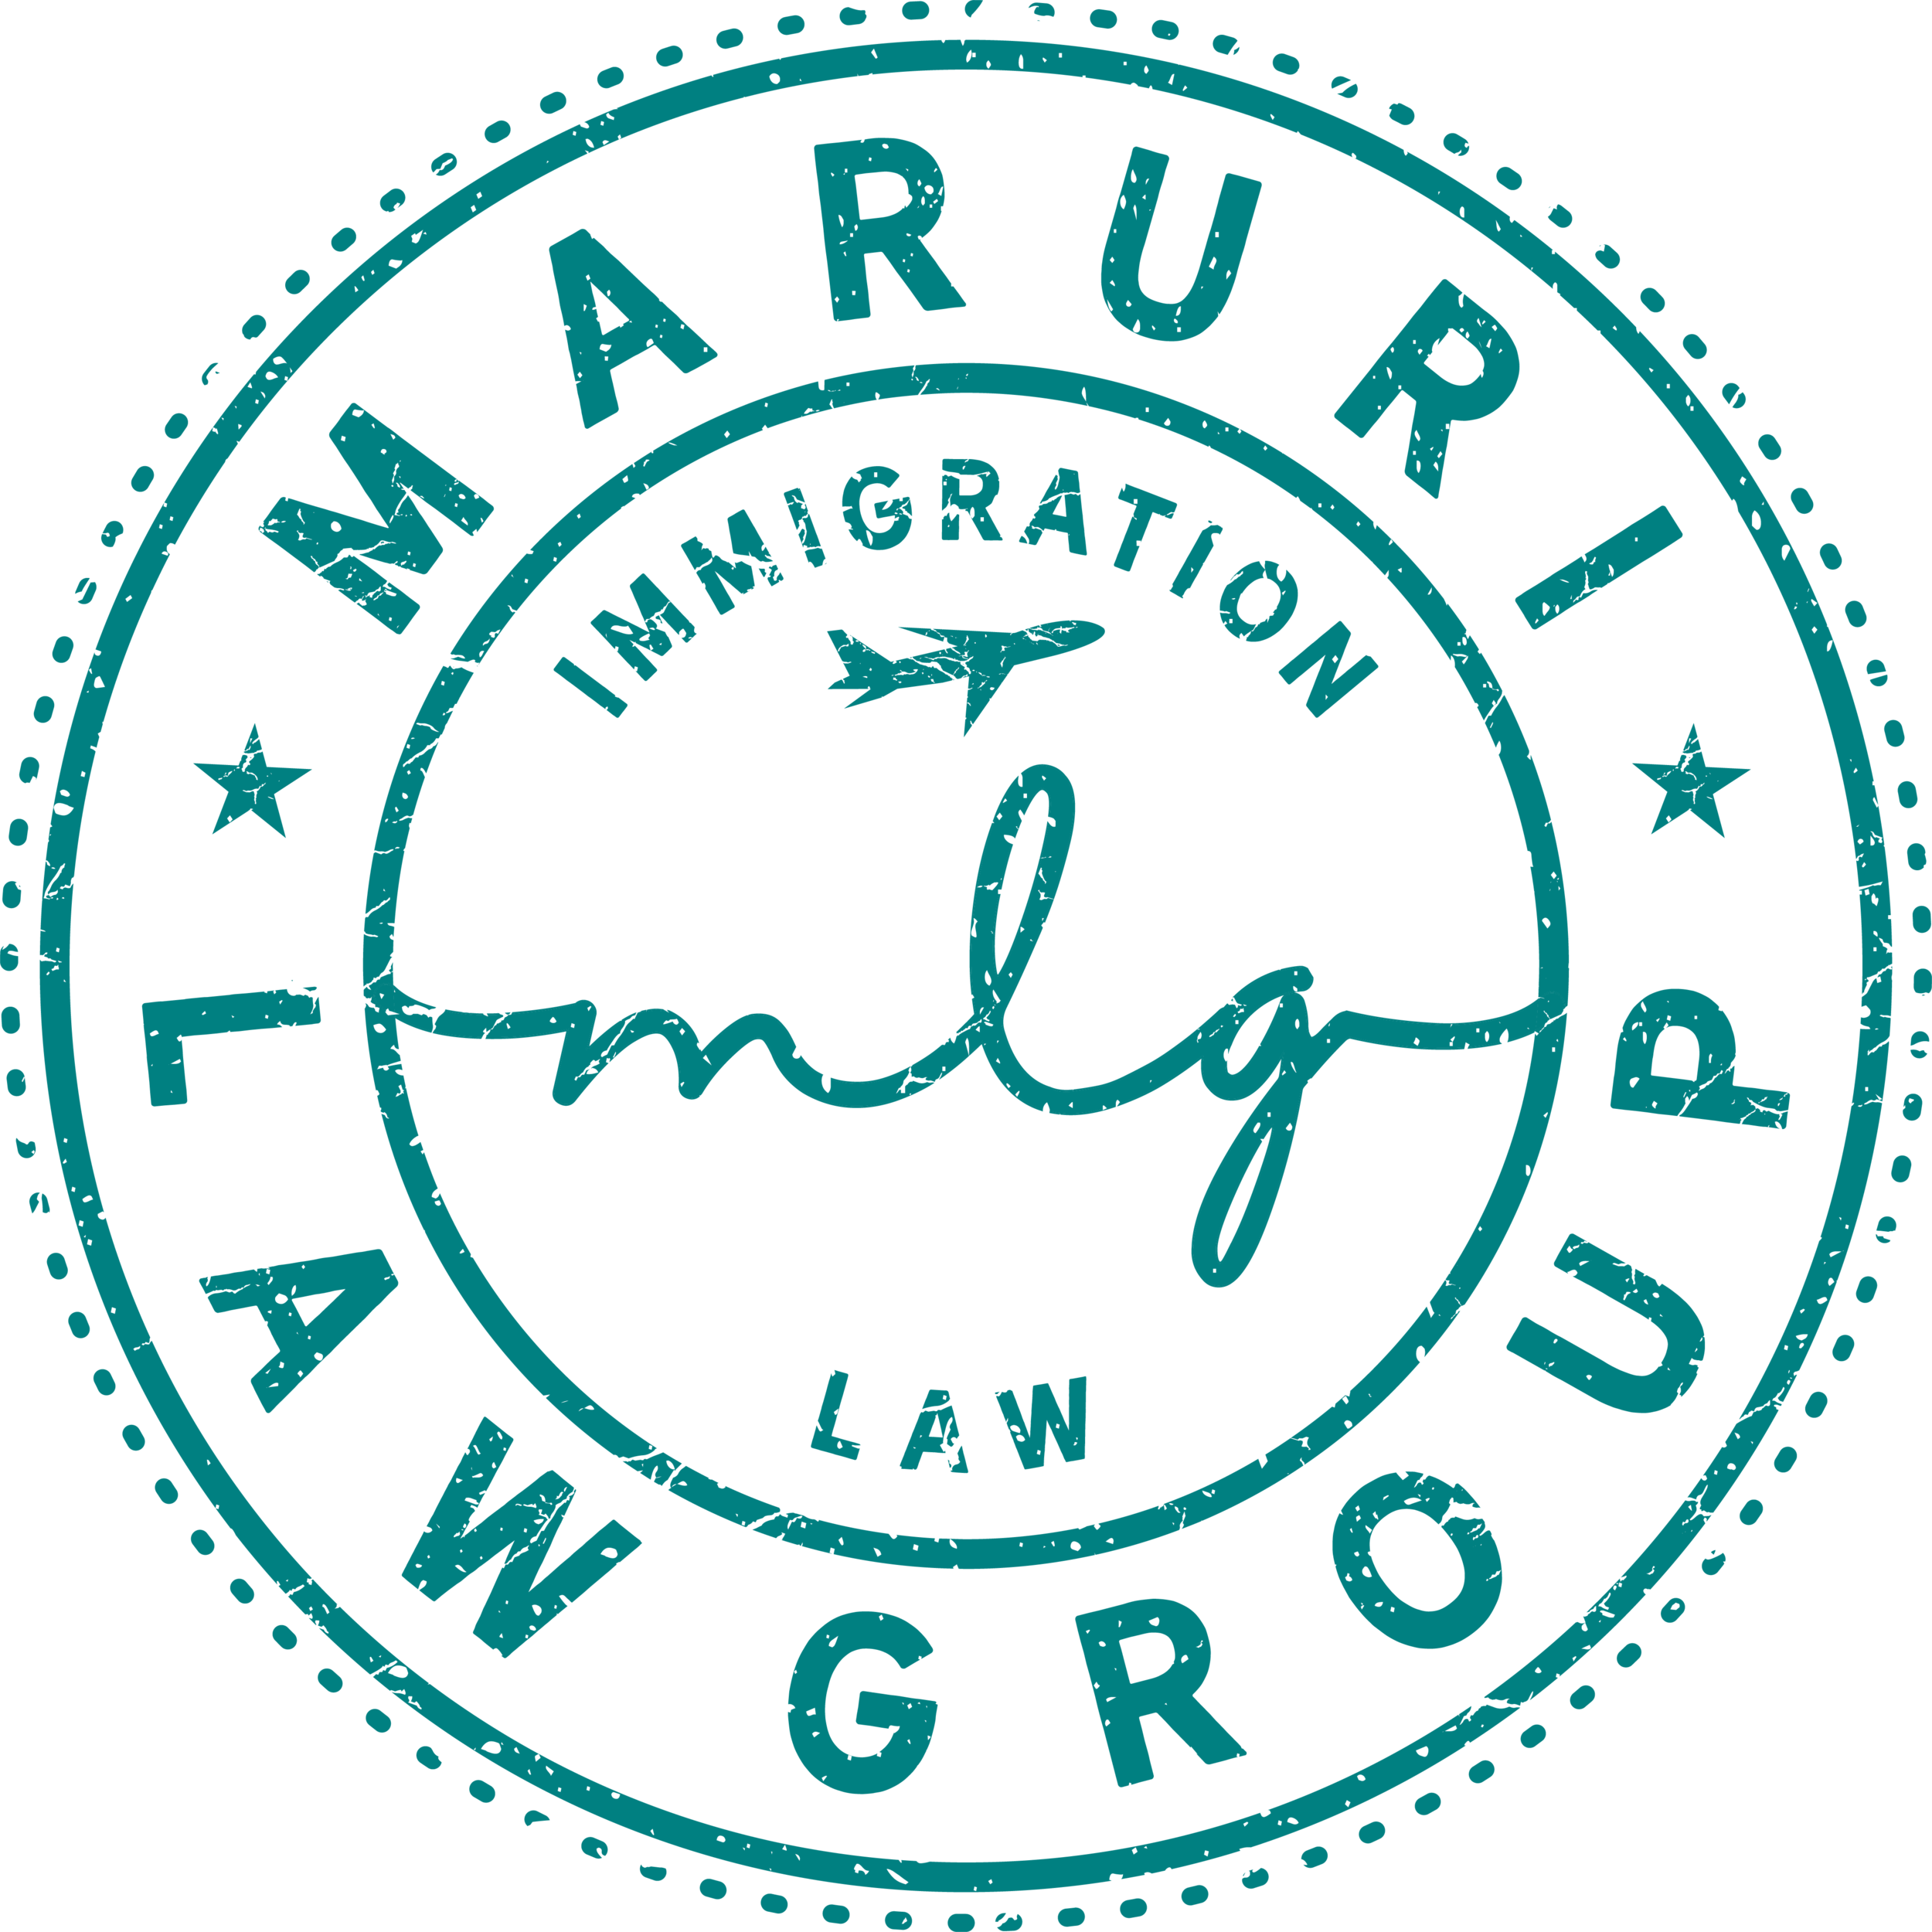 Maruri Law Group